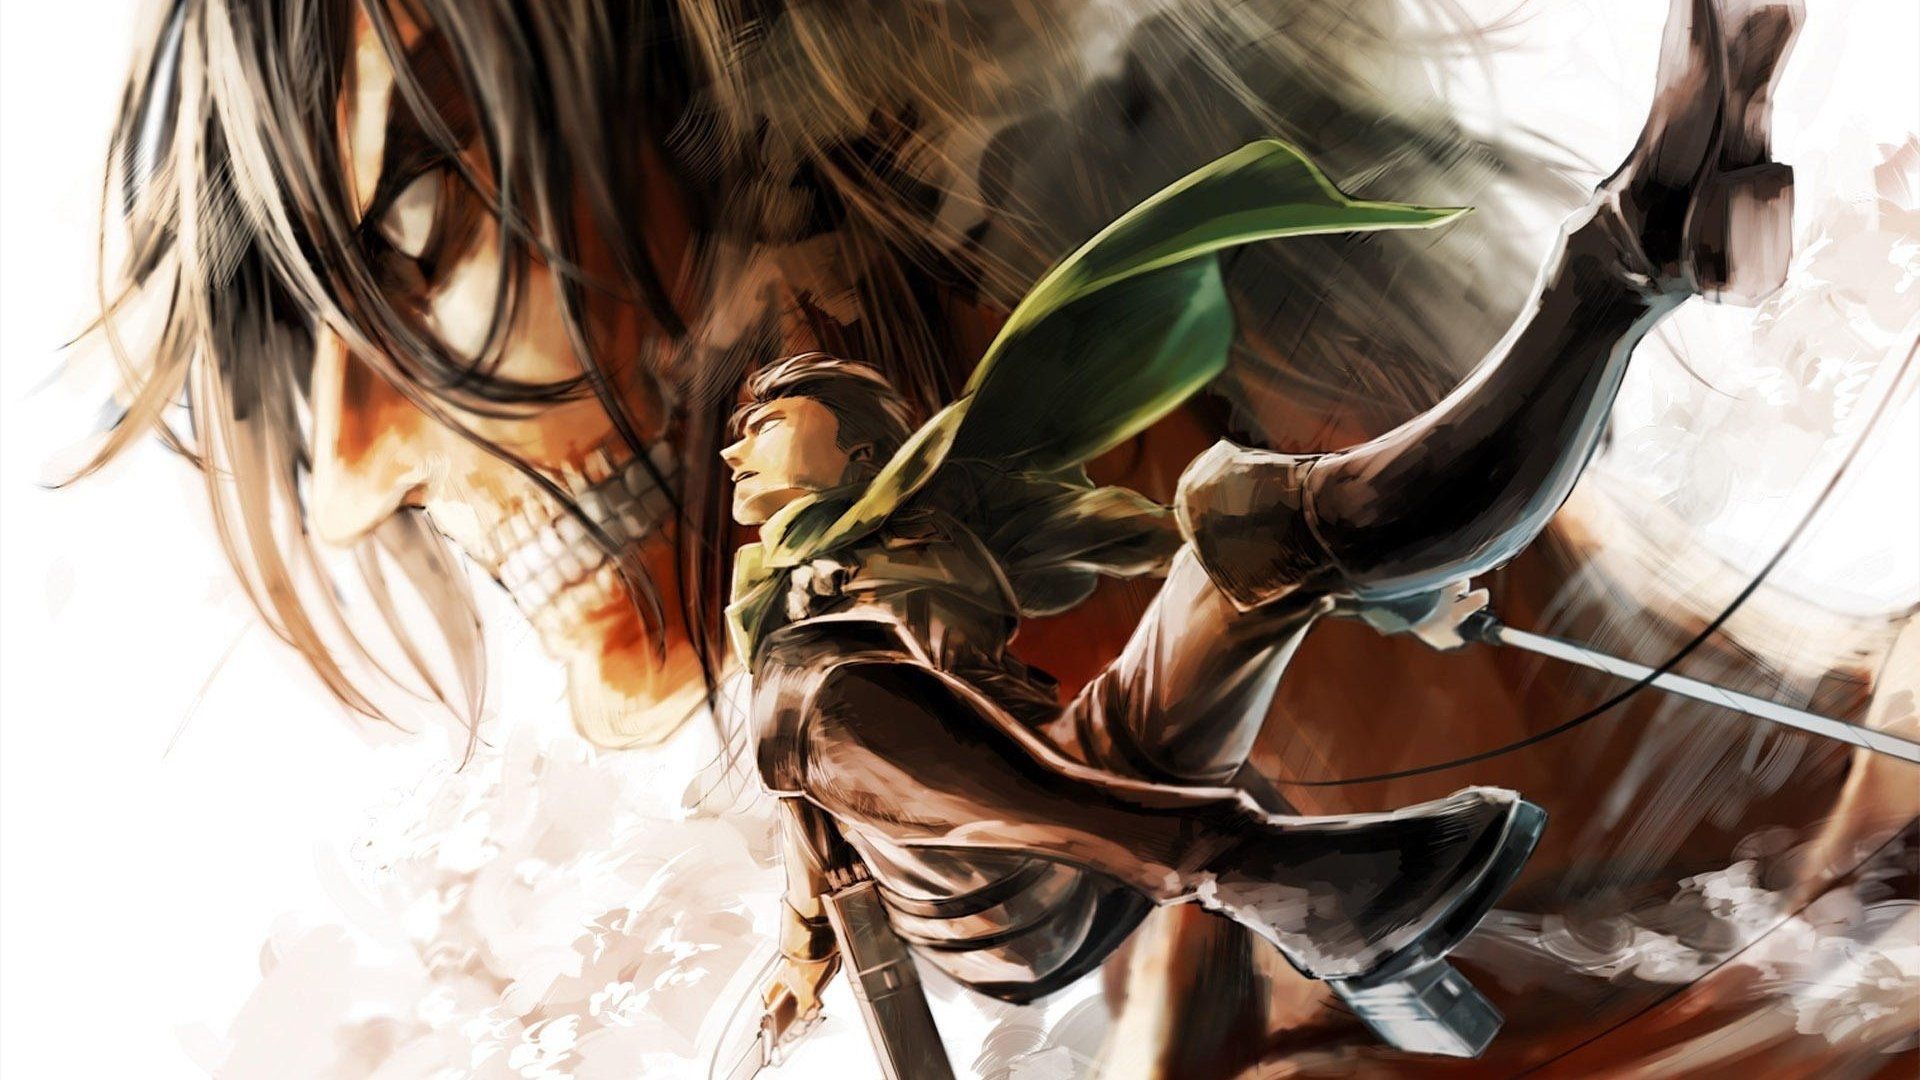 Attack on Titan Chapter 133 Release Date, Spoilers: Injured Levi vs Eren Titan Battle Confirmed?